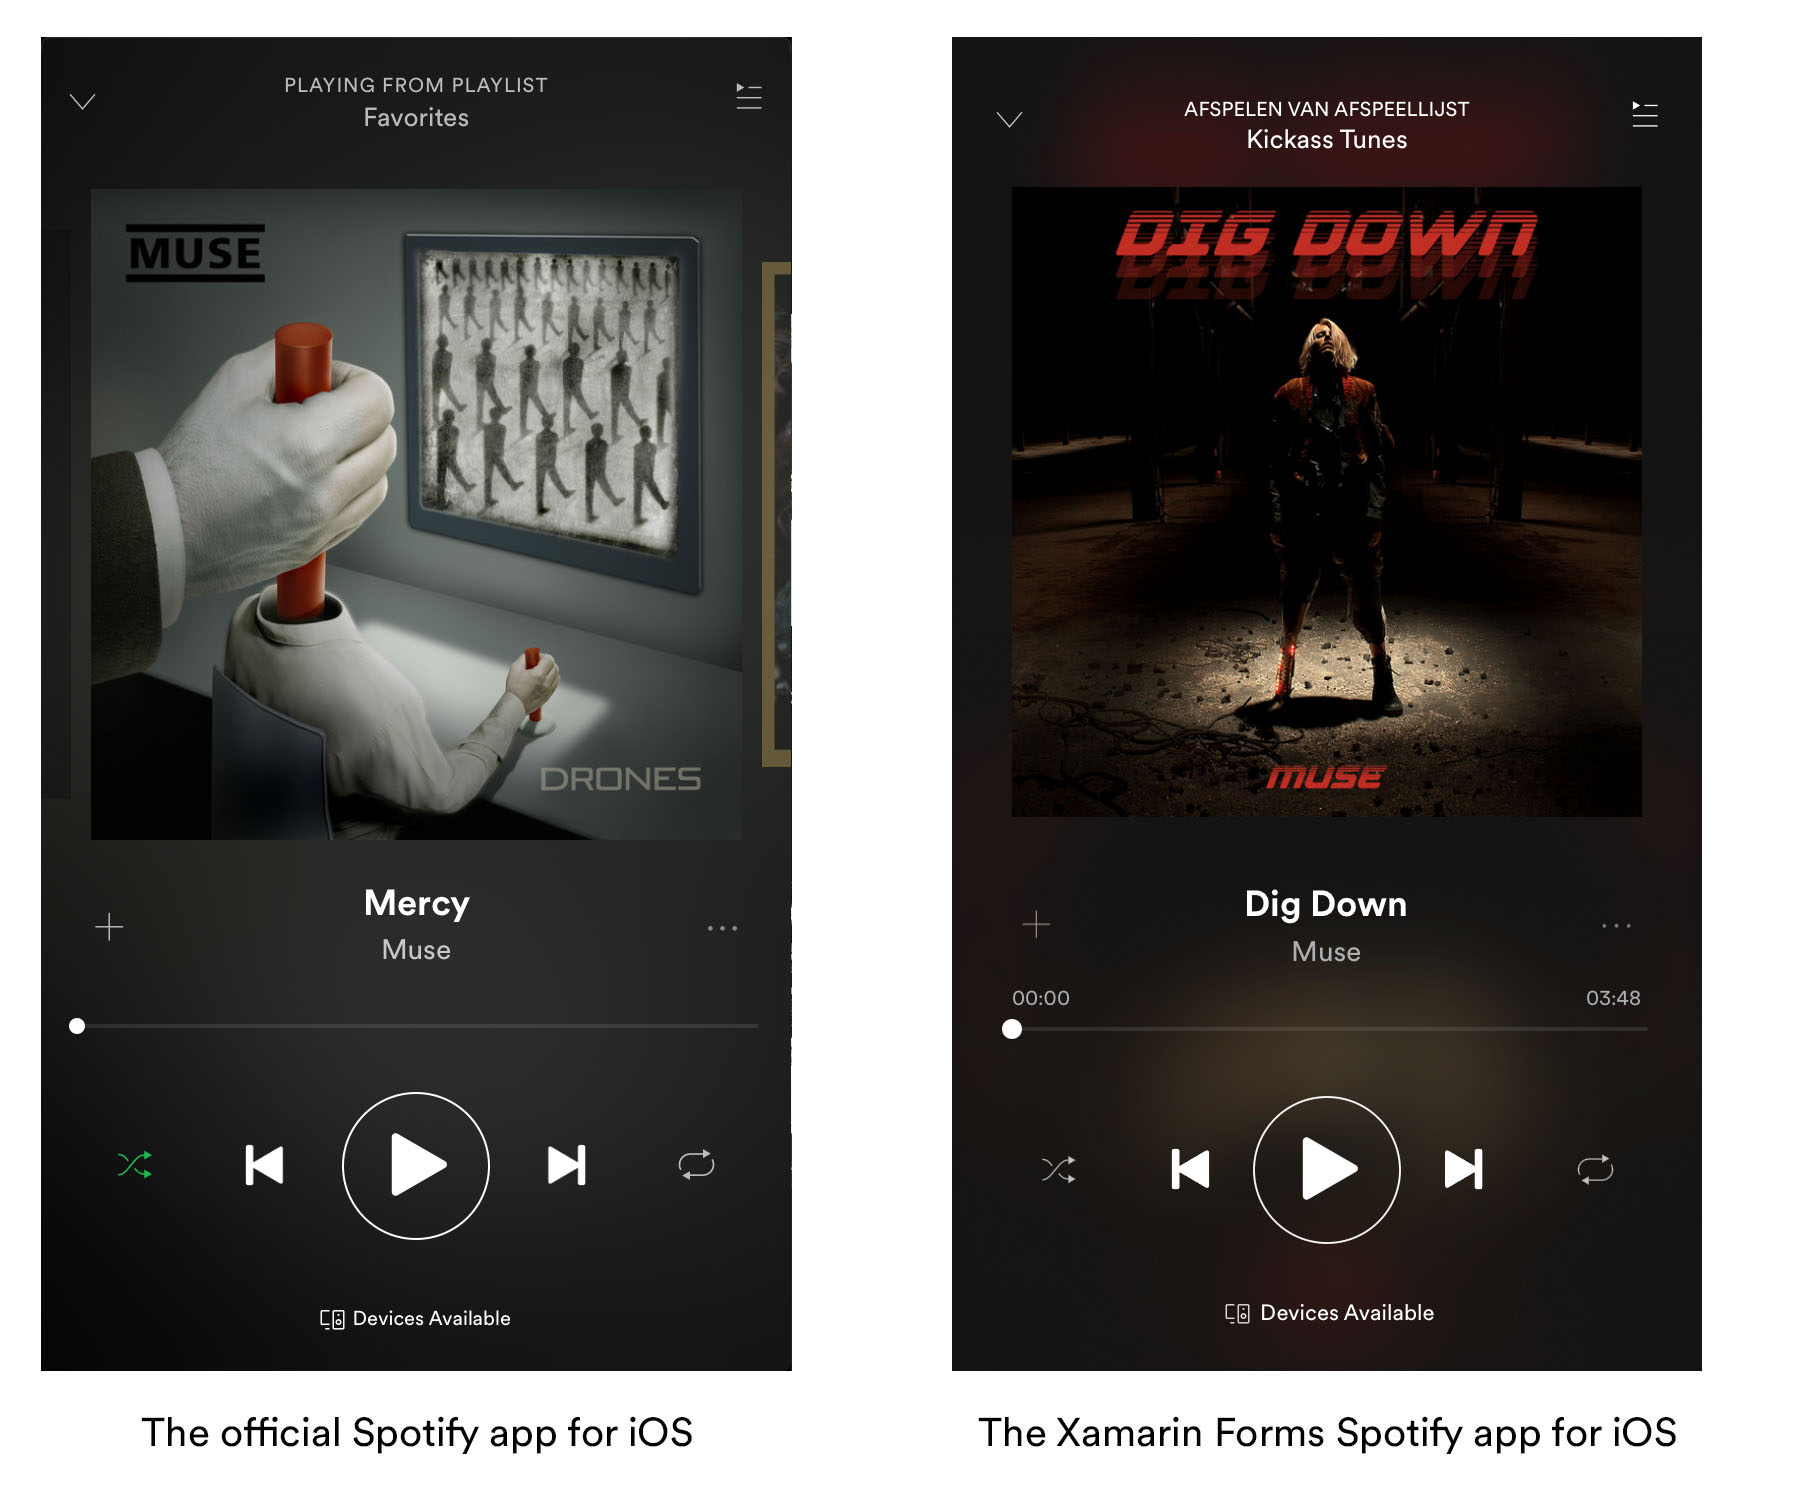 Spotify UI - Player screen in iOS comparison